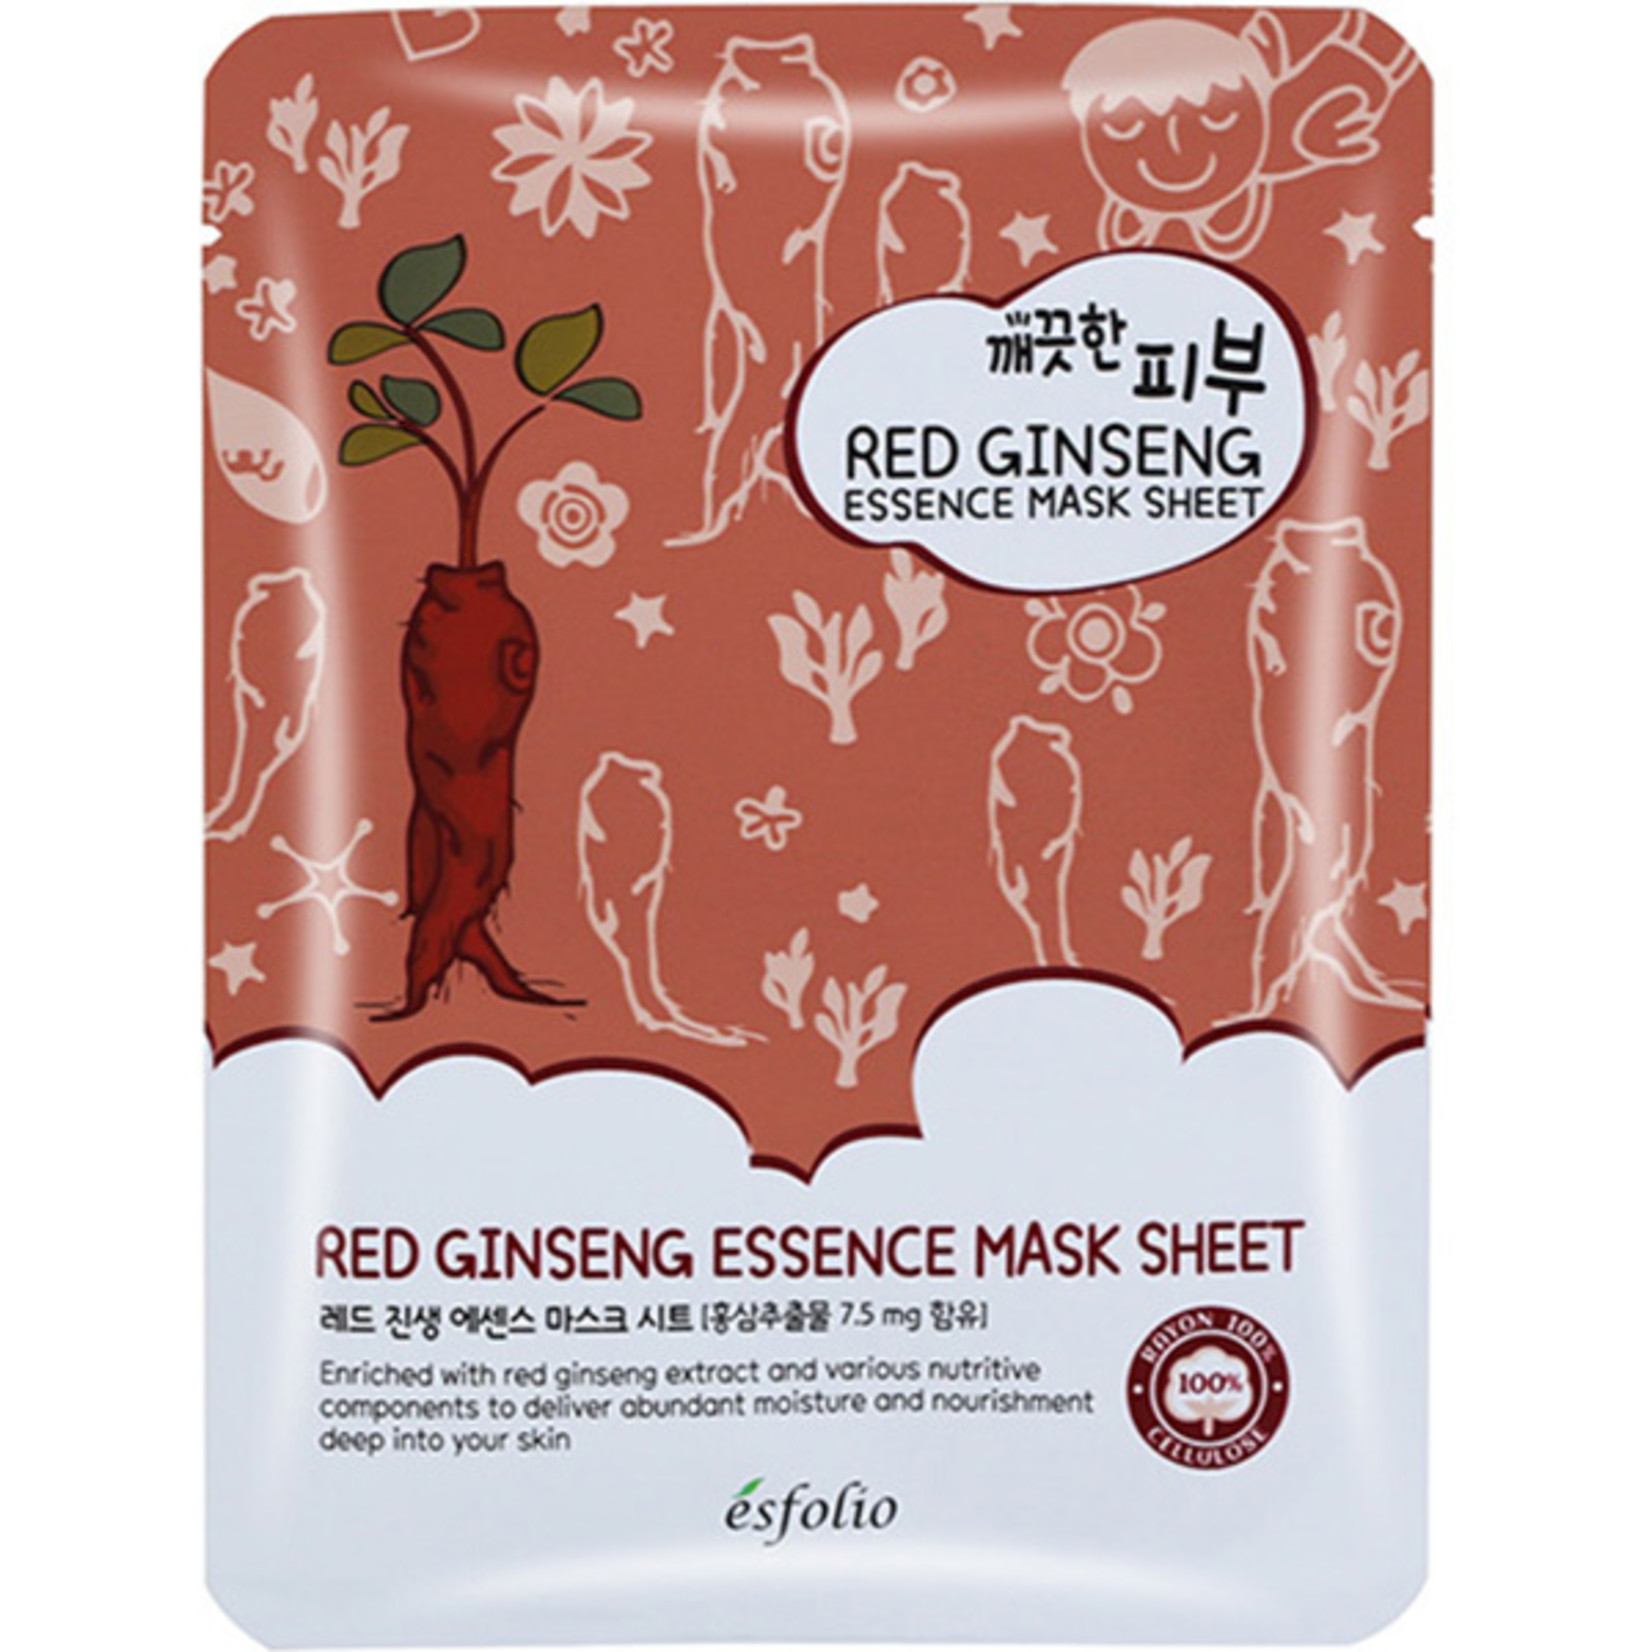 esfolio Pure Skin Red Ginseng Essence Sheet Mask